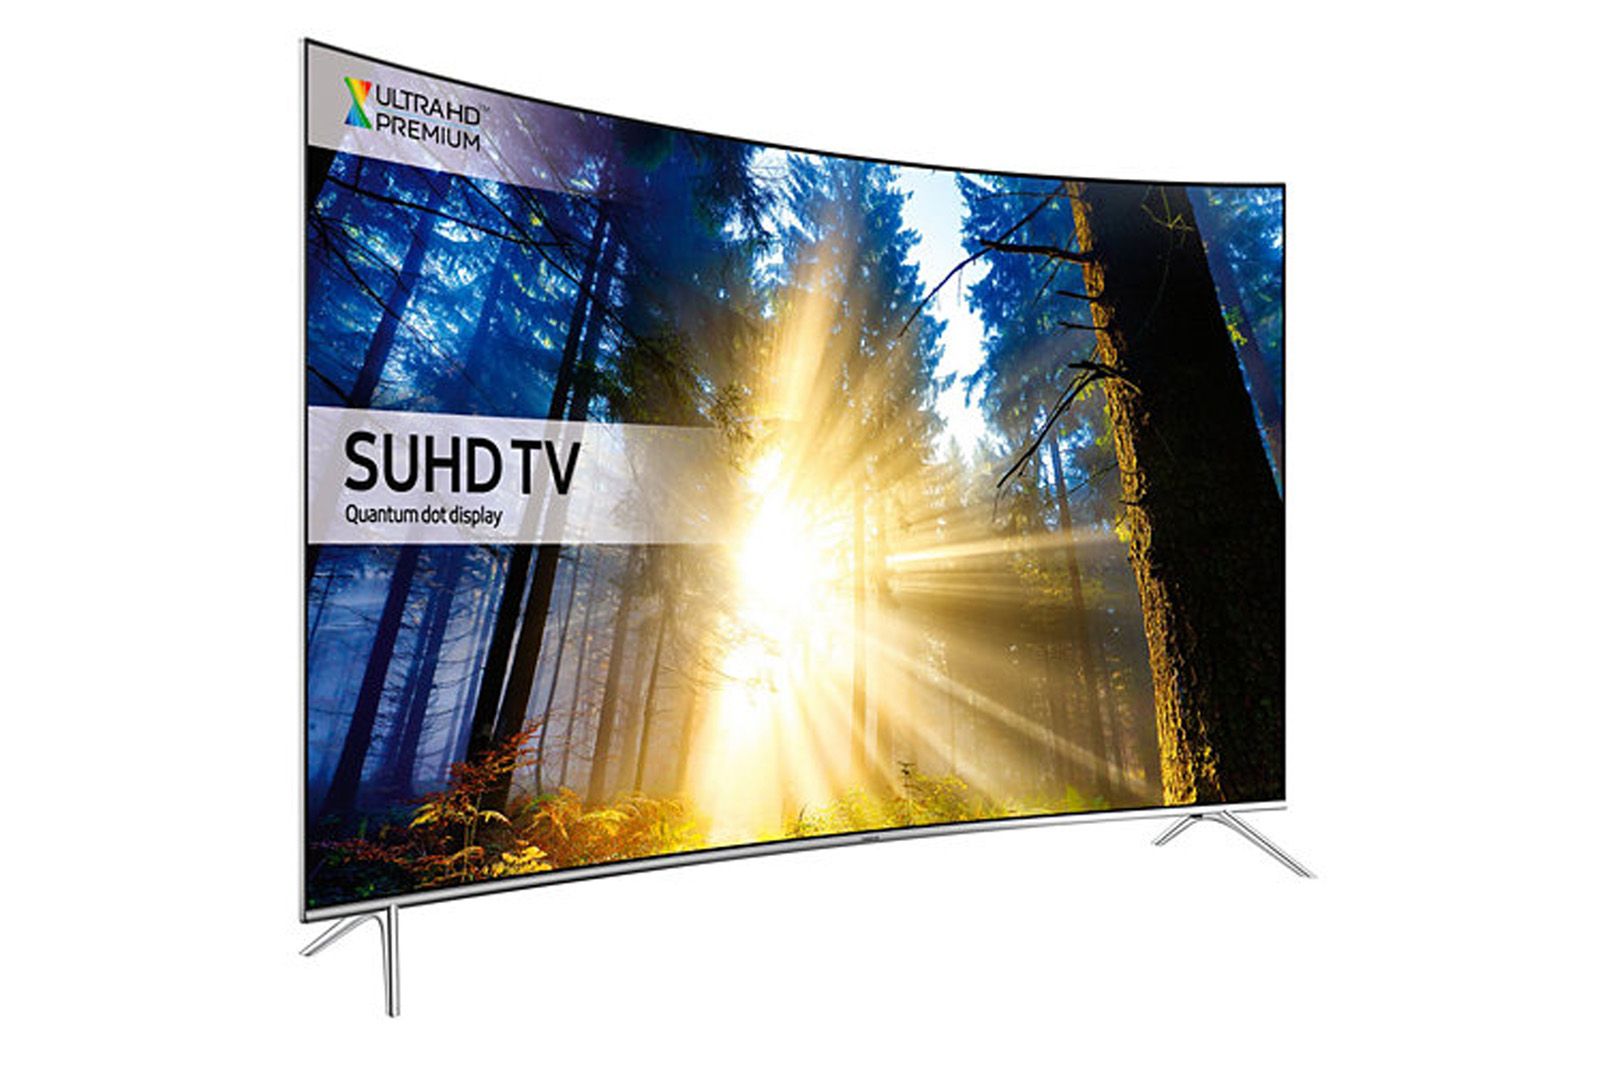 samsung 4k hdr tv choices for 2016 ks9000 ks8000 ks7500 and ks7000 compared image 5